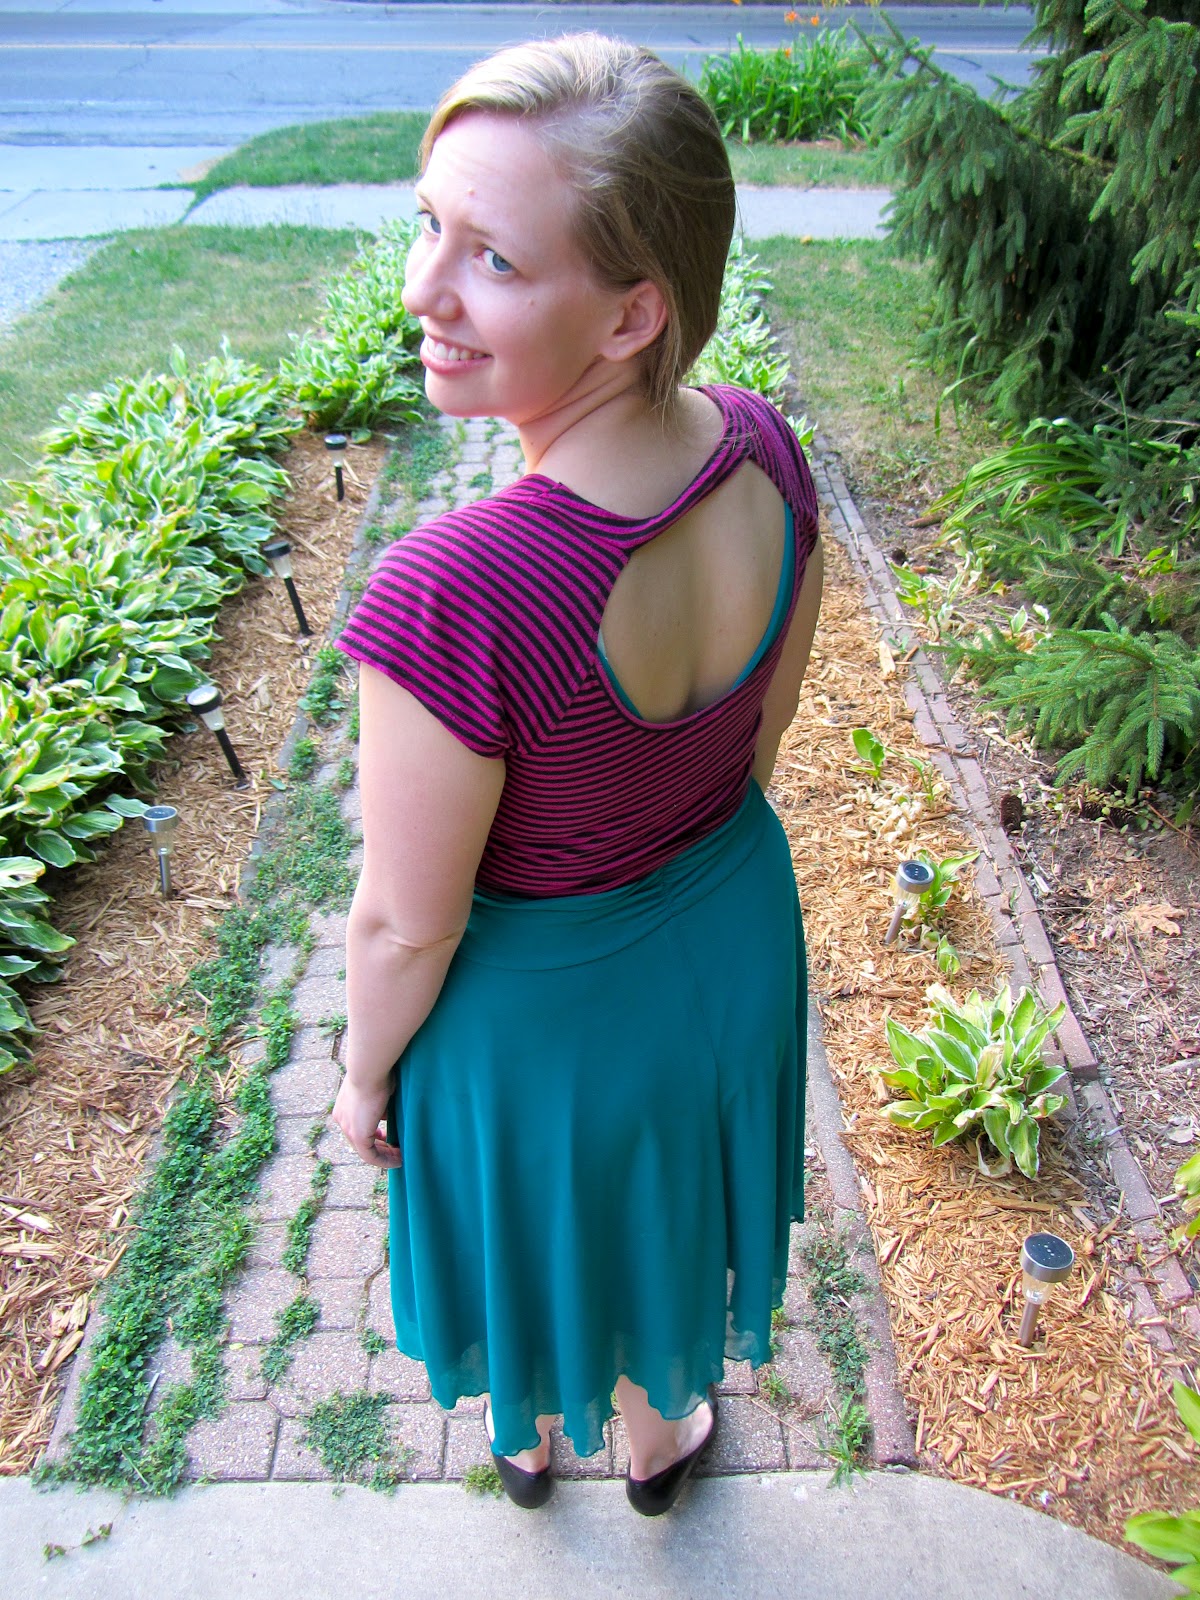 Lovely Blonde Yank: bright green twirly skirt